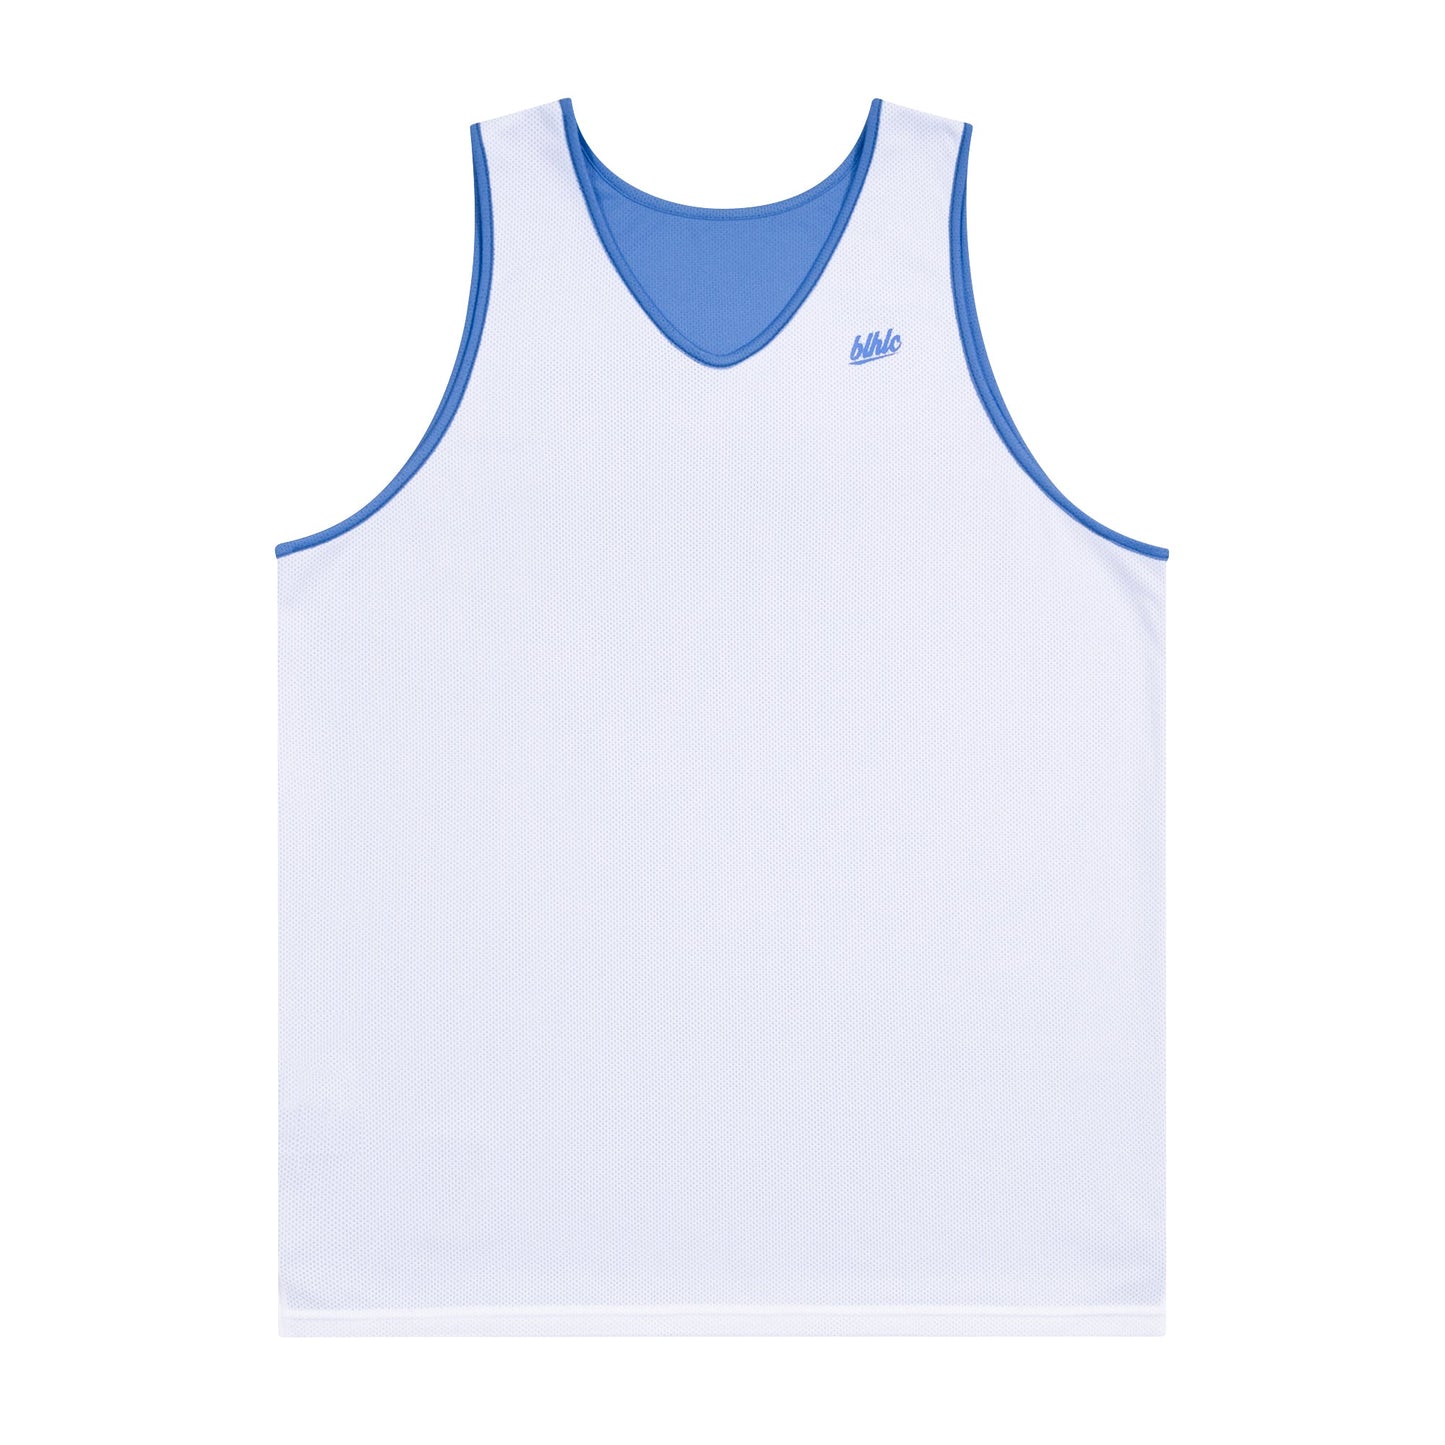 Basic Reversible Jersey (sax/white) - CUSTOM